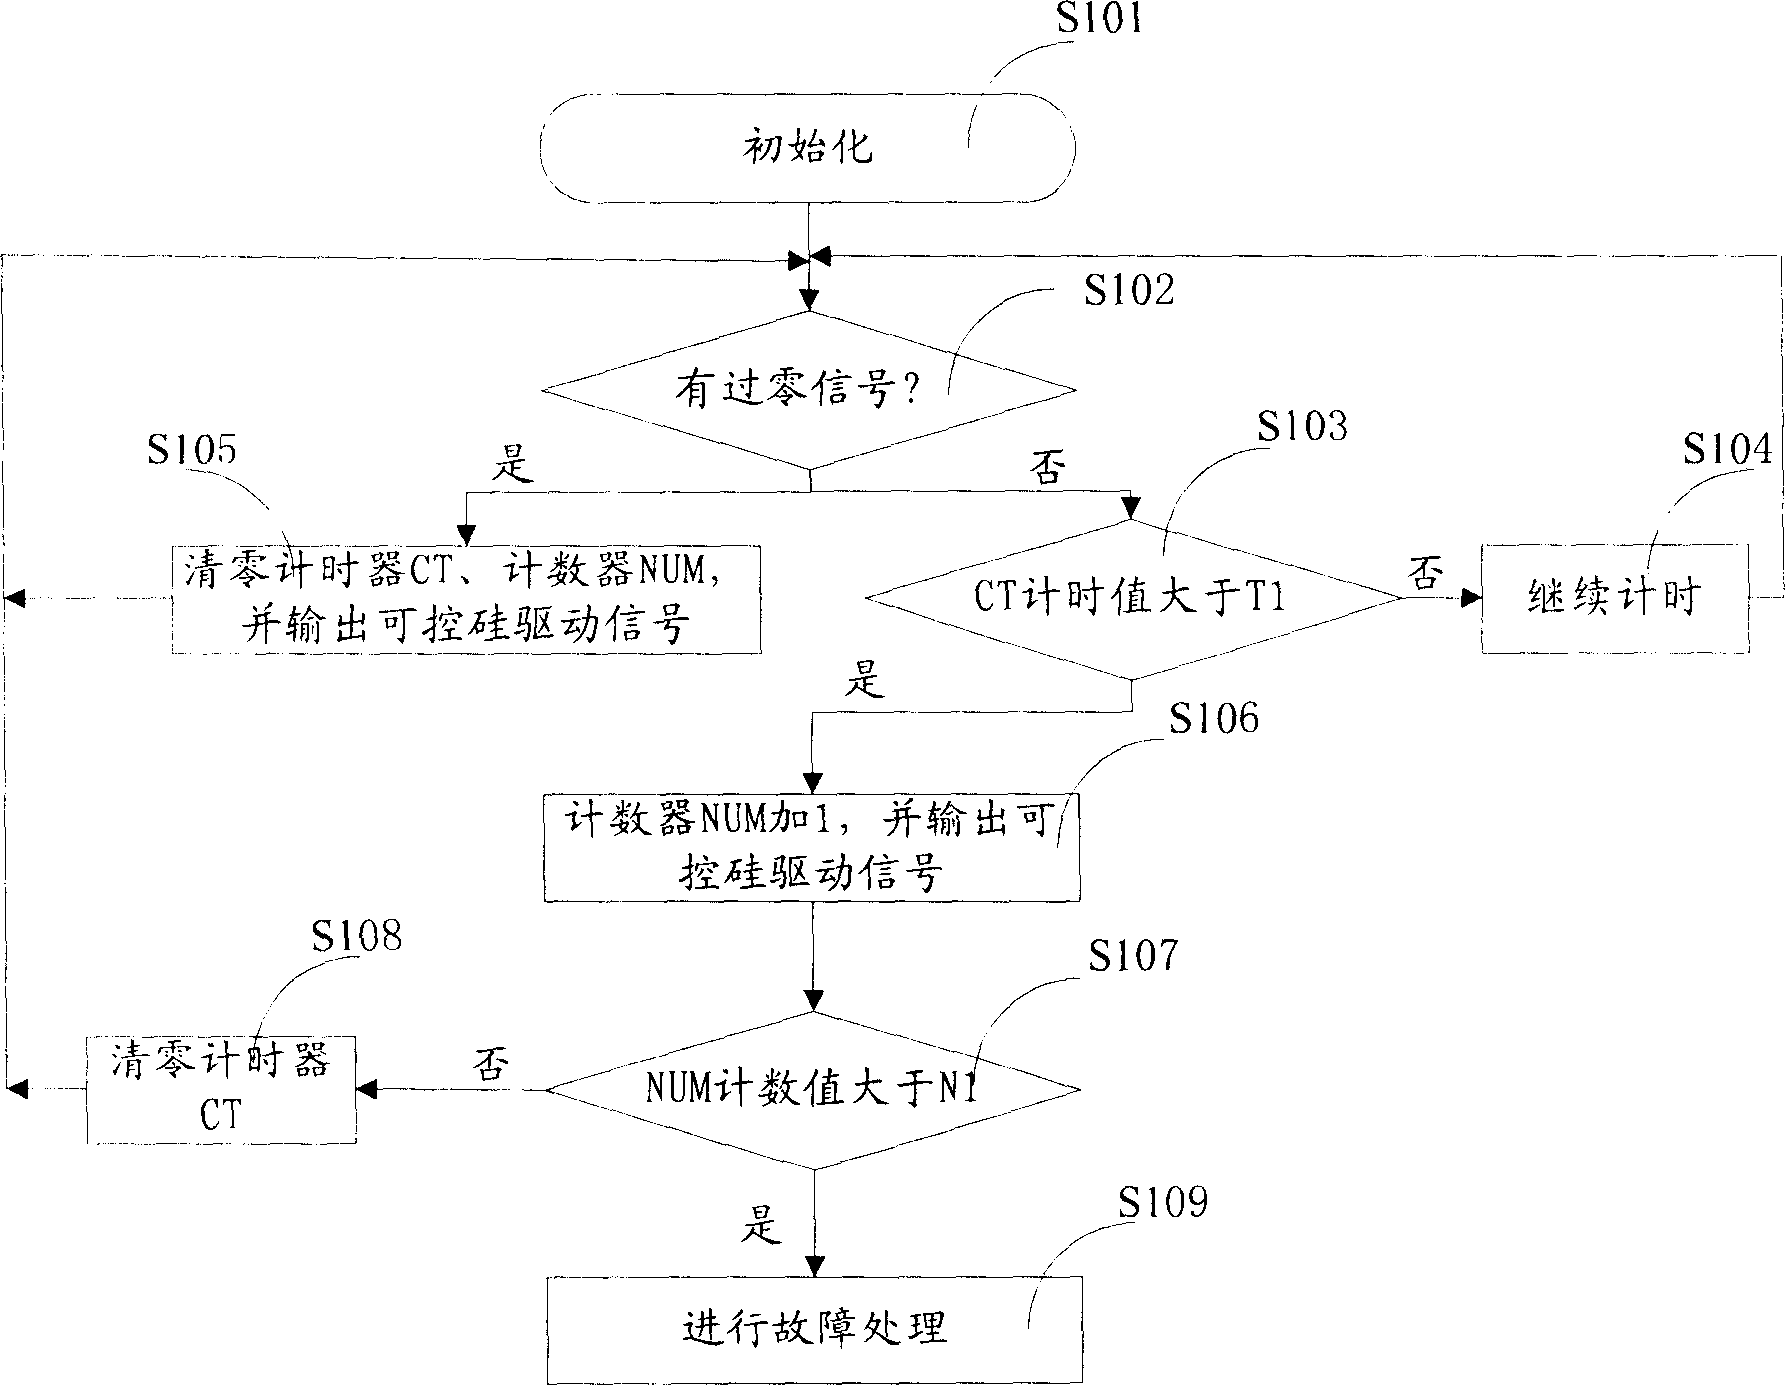 Fault detection method of zero-cross triggering circuit